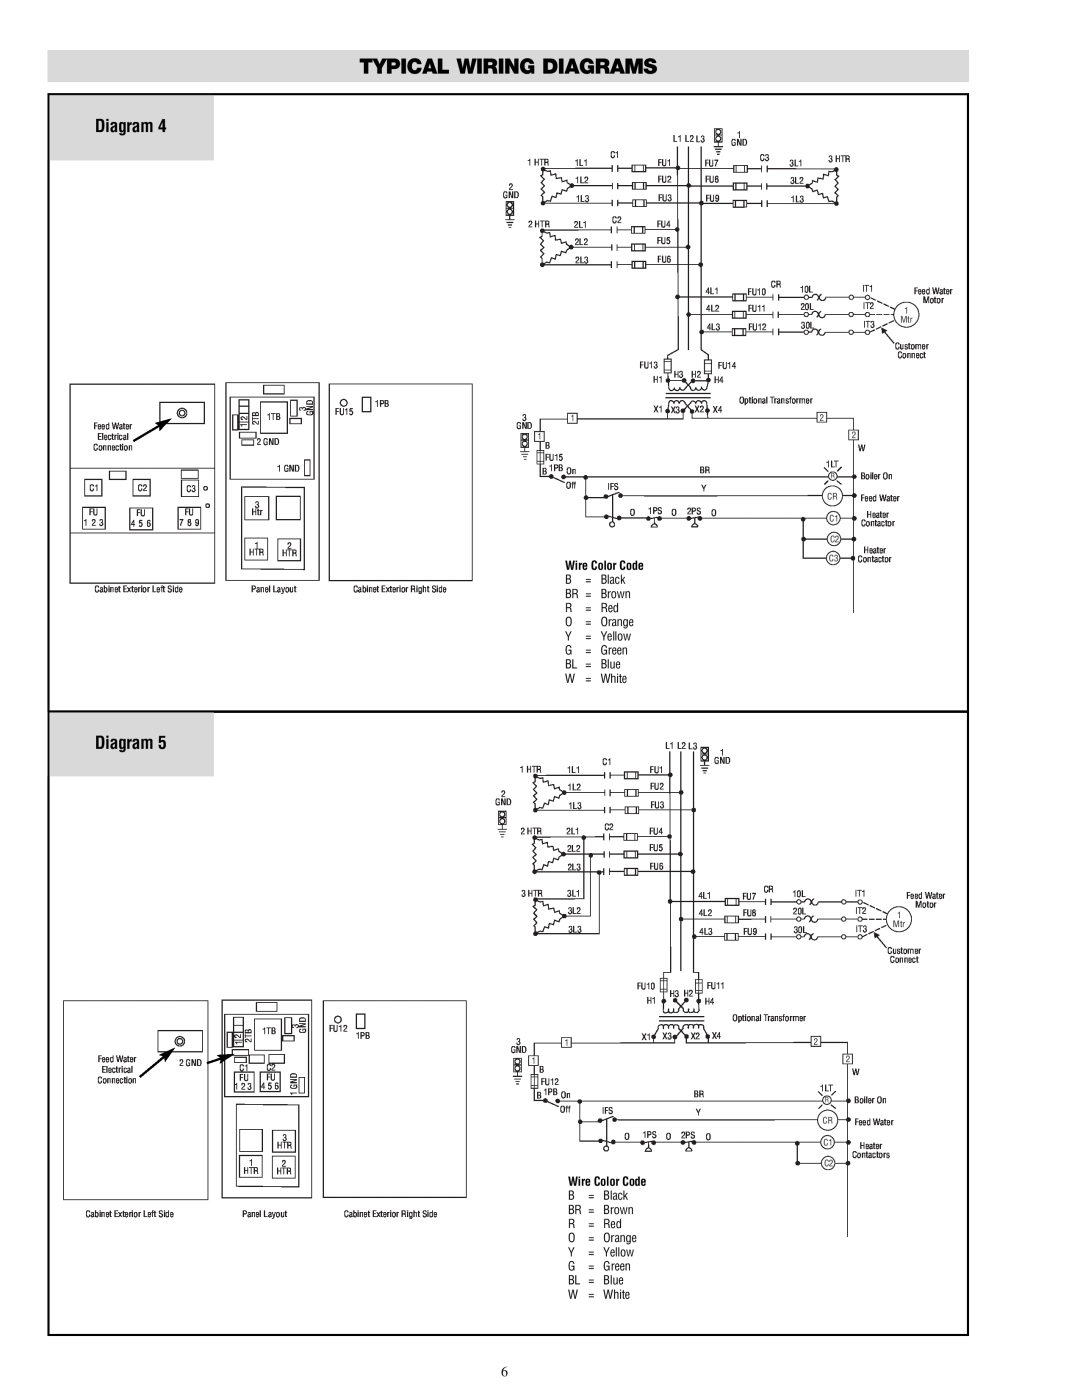 Chromalox CHPES-6A manual Typical Wiring Diagrams, Orange, Yellow, GND1 